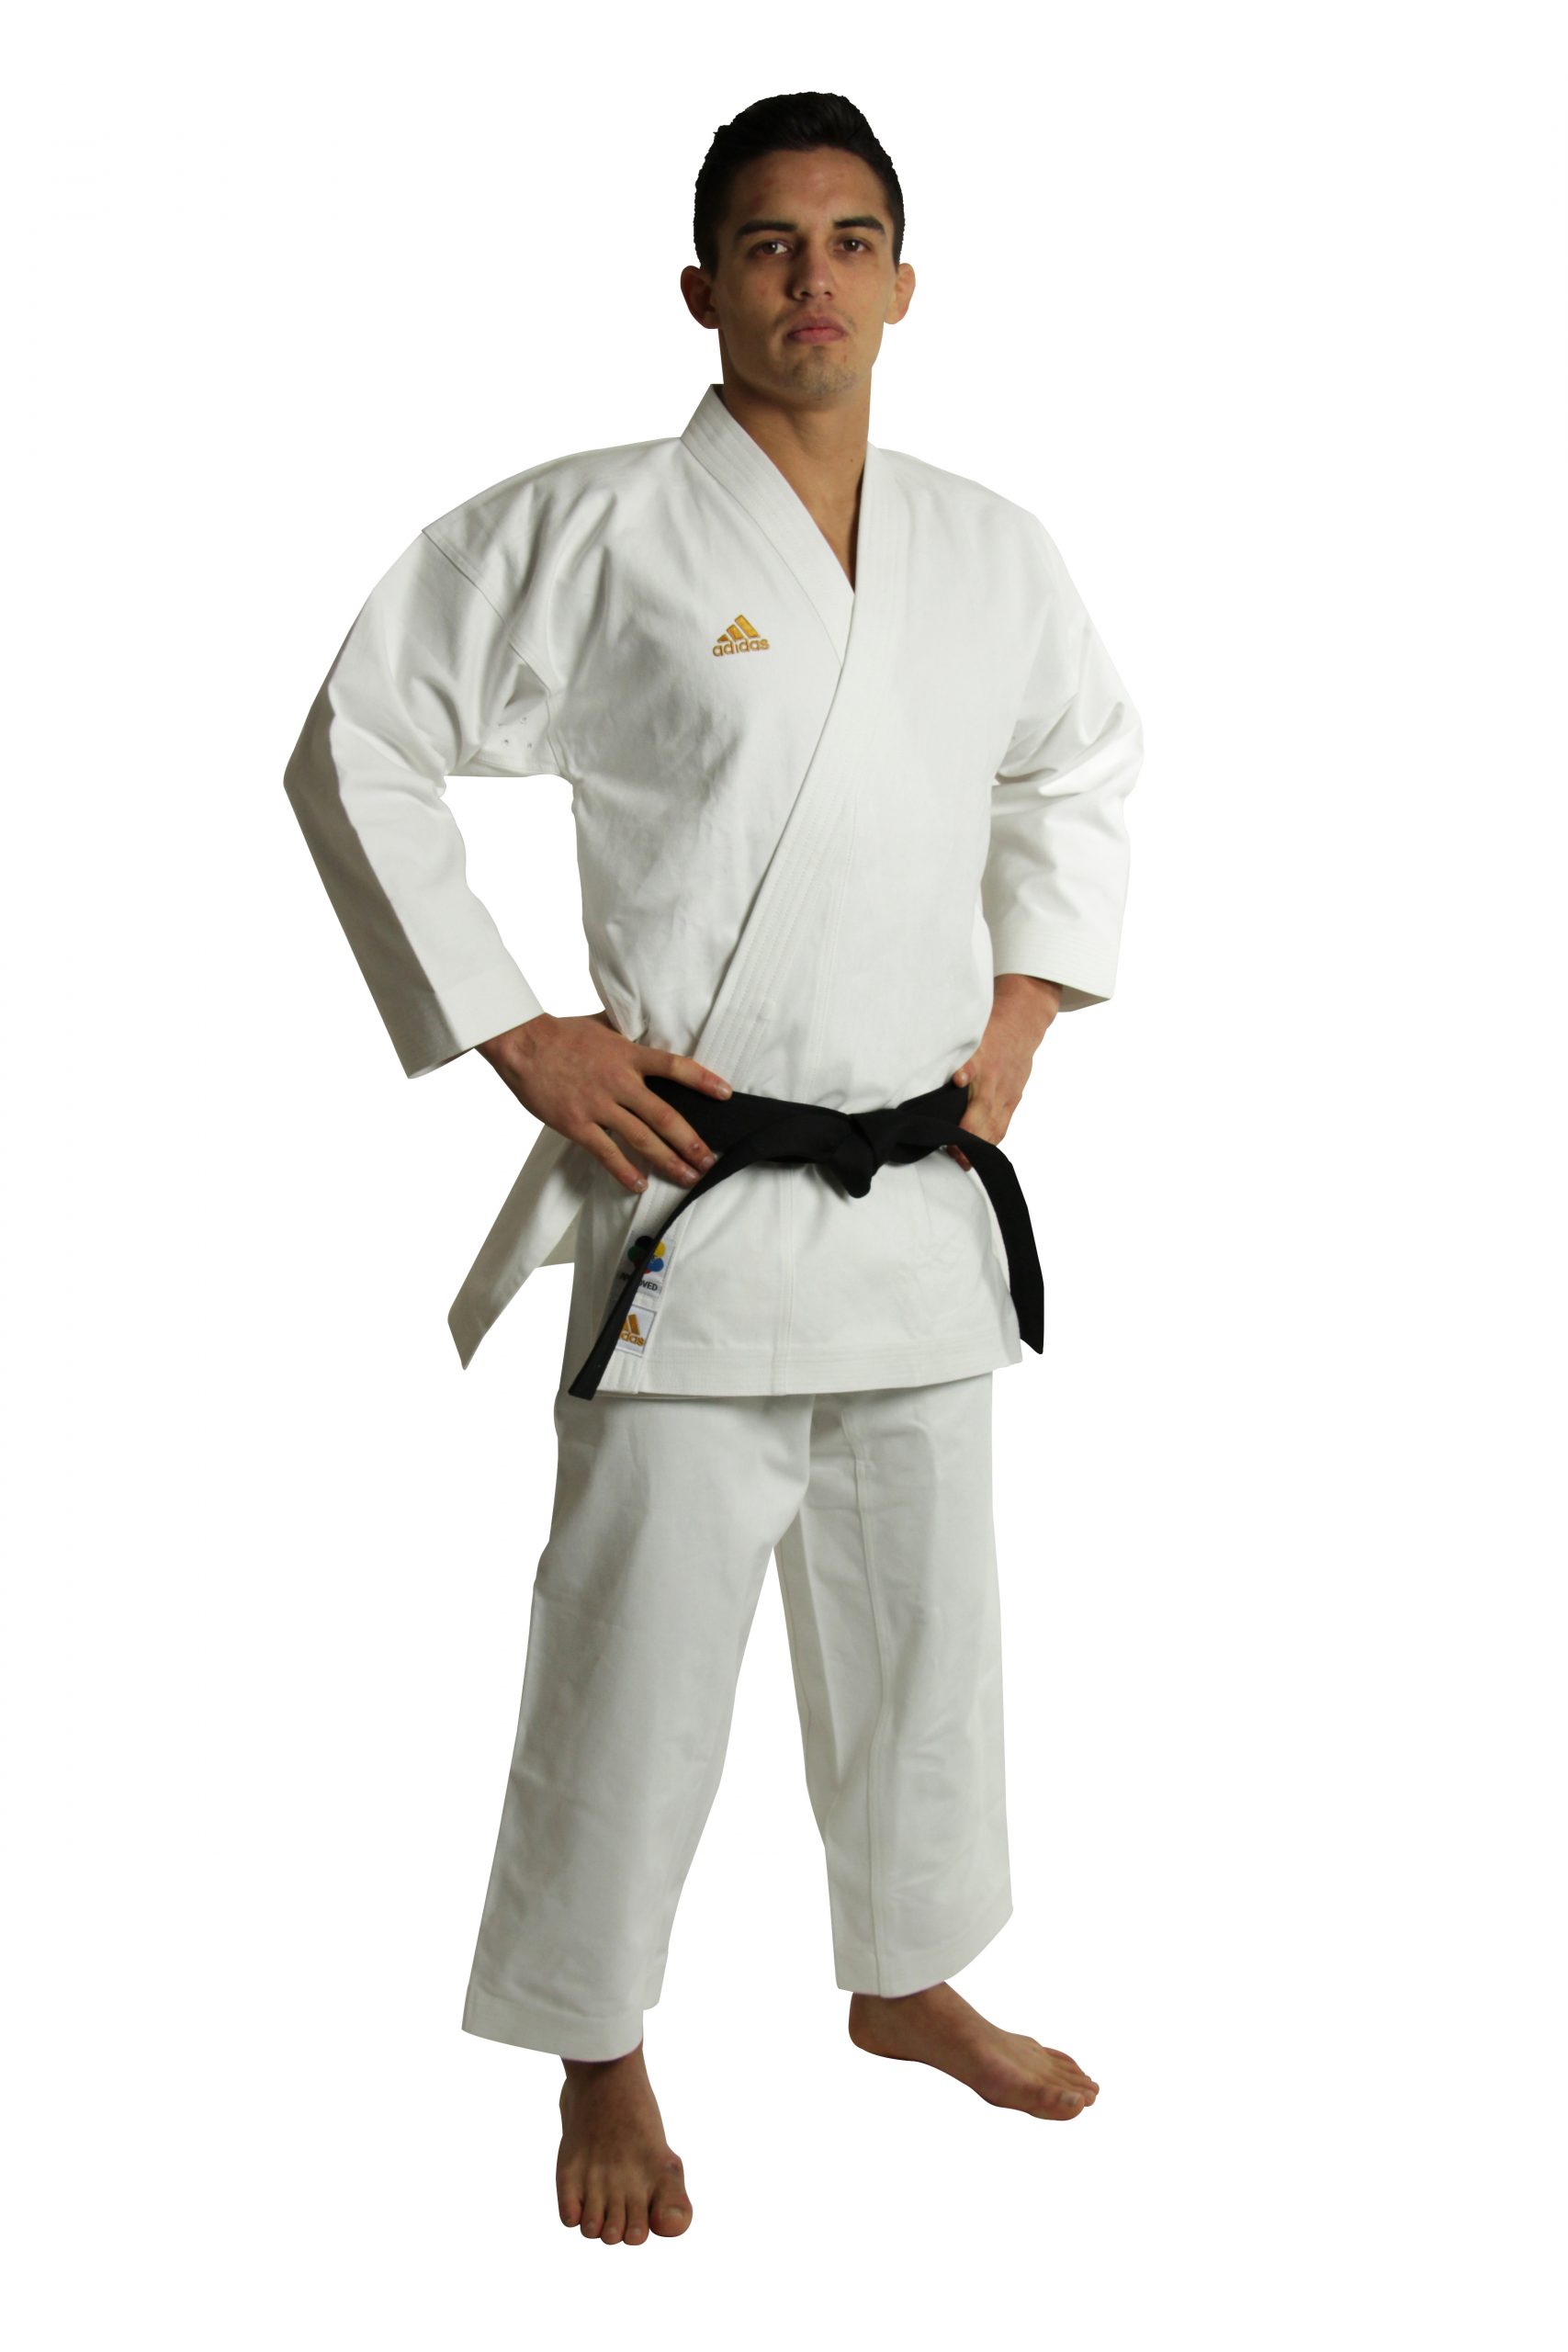 Hobart Inocencia Sureste Karategi Adidas CHAMPION JAPANESE - Indumentaria para artes marciales